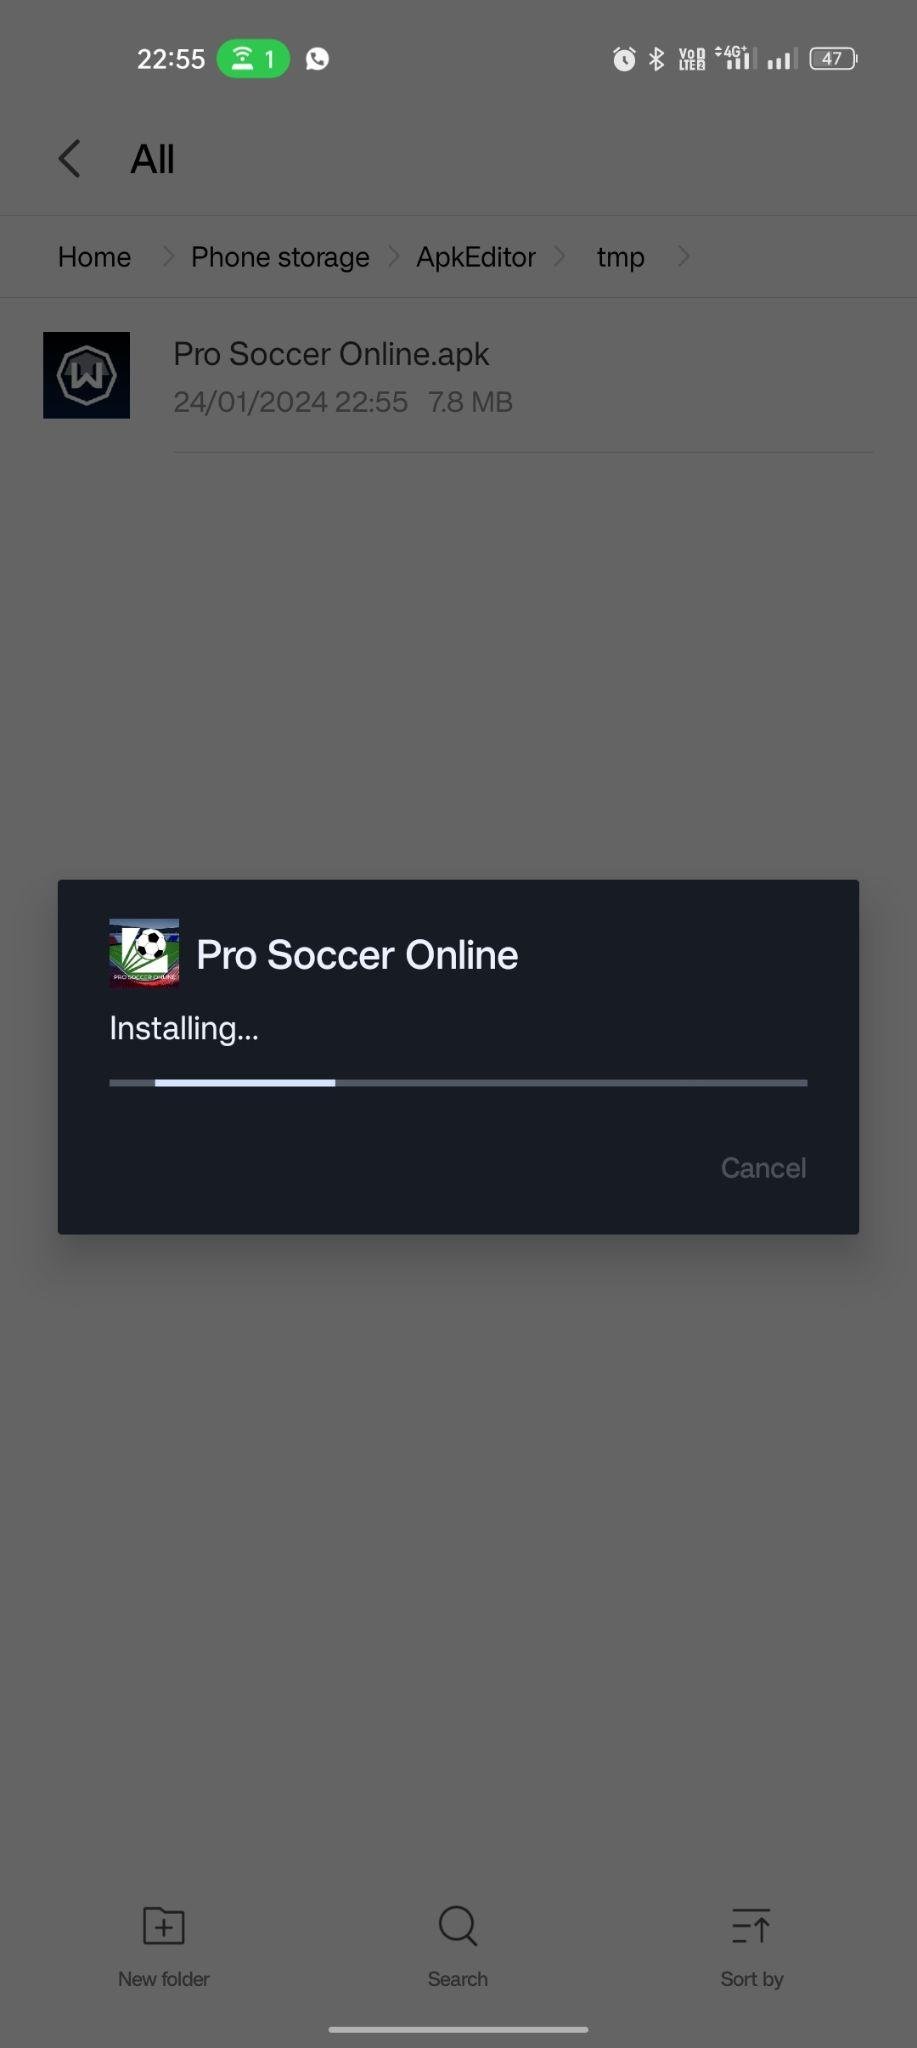 Pro Soccer Online apk installing